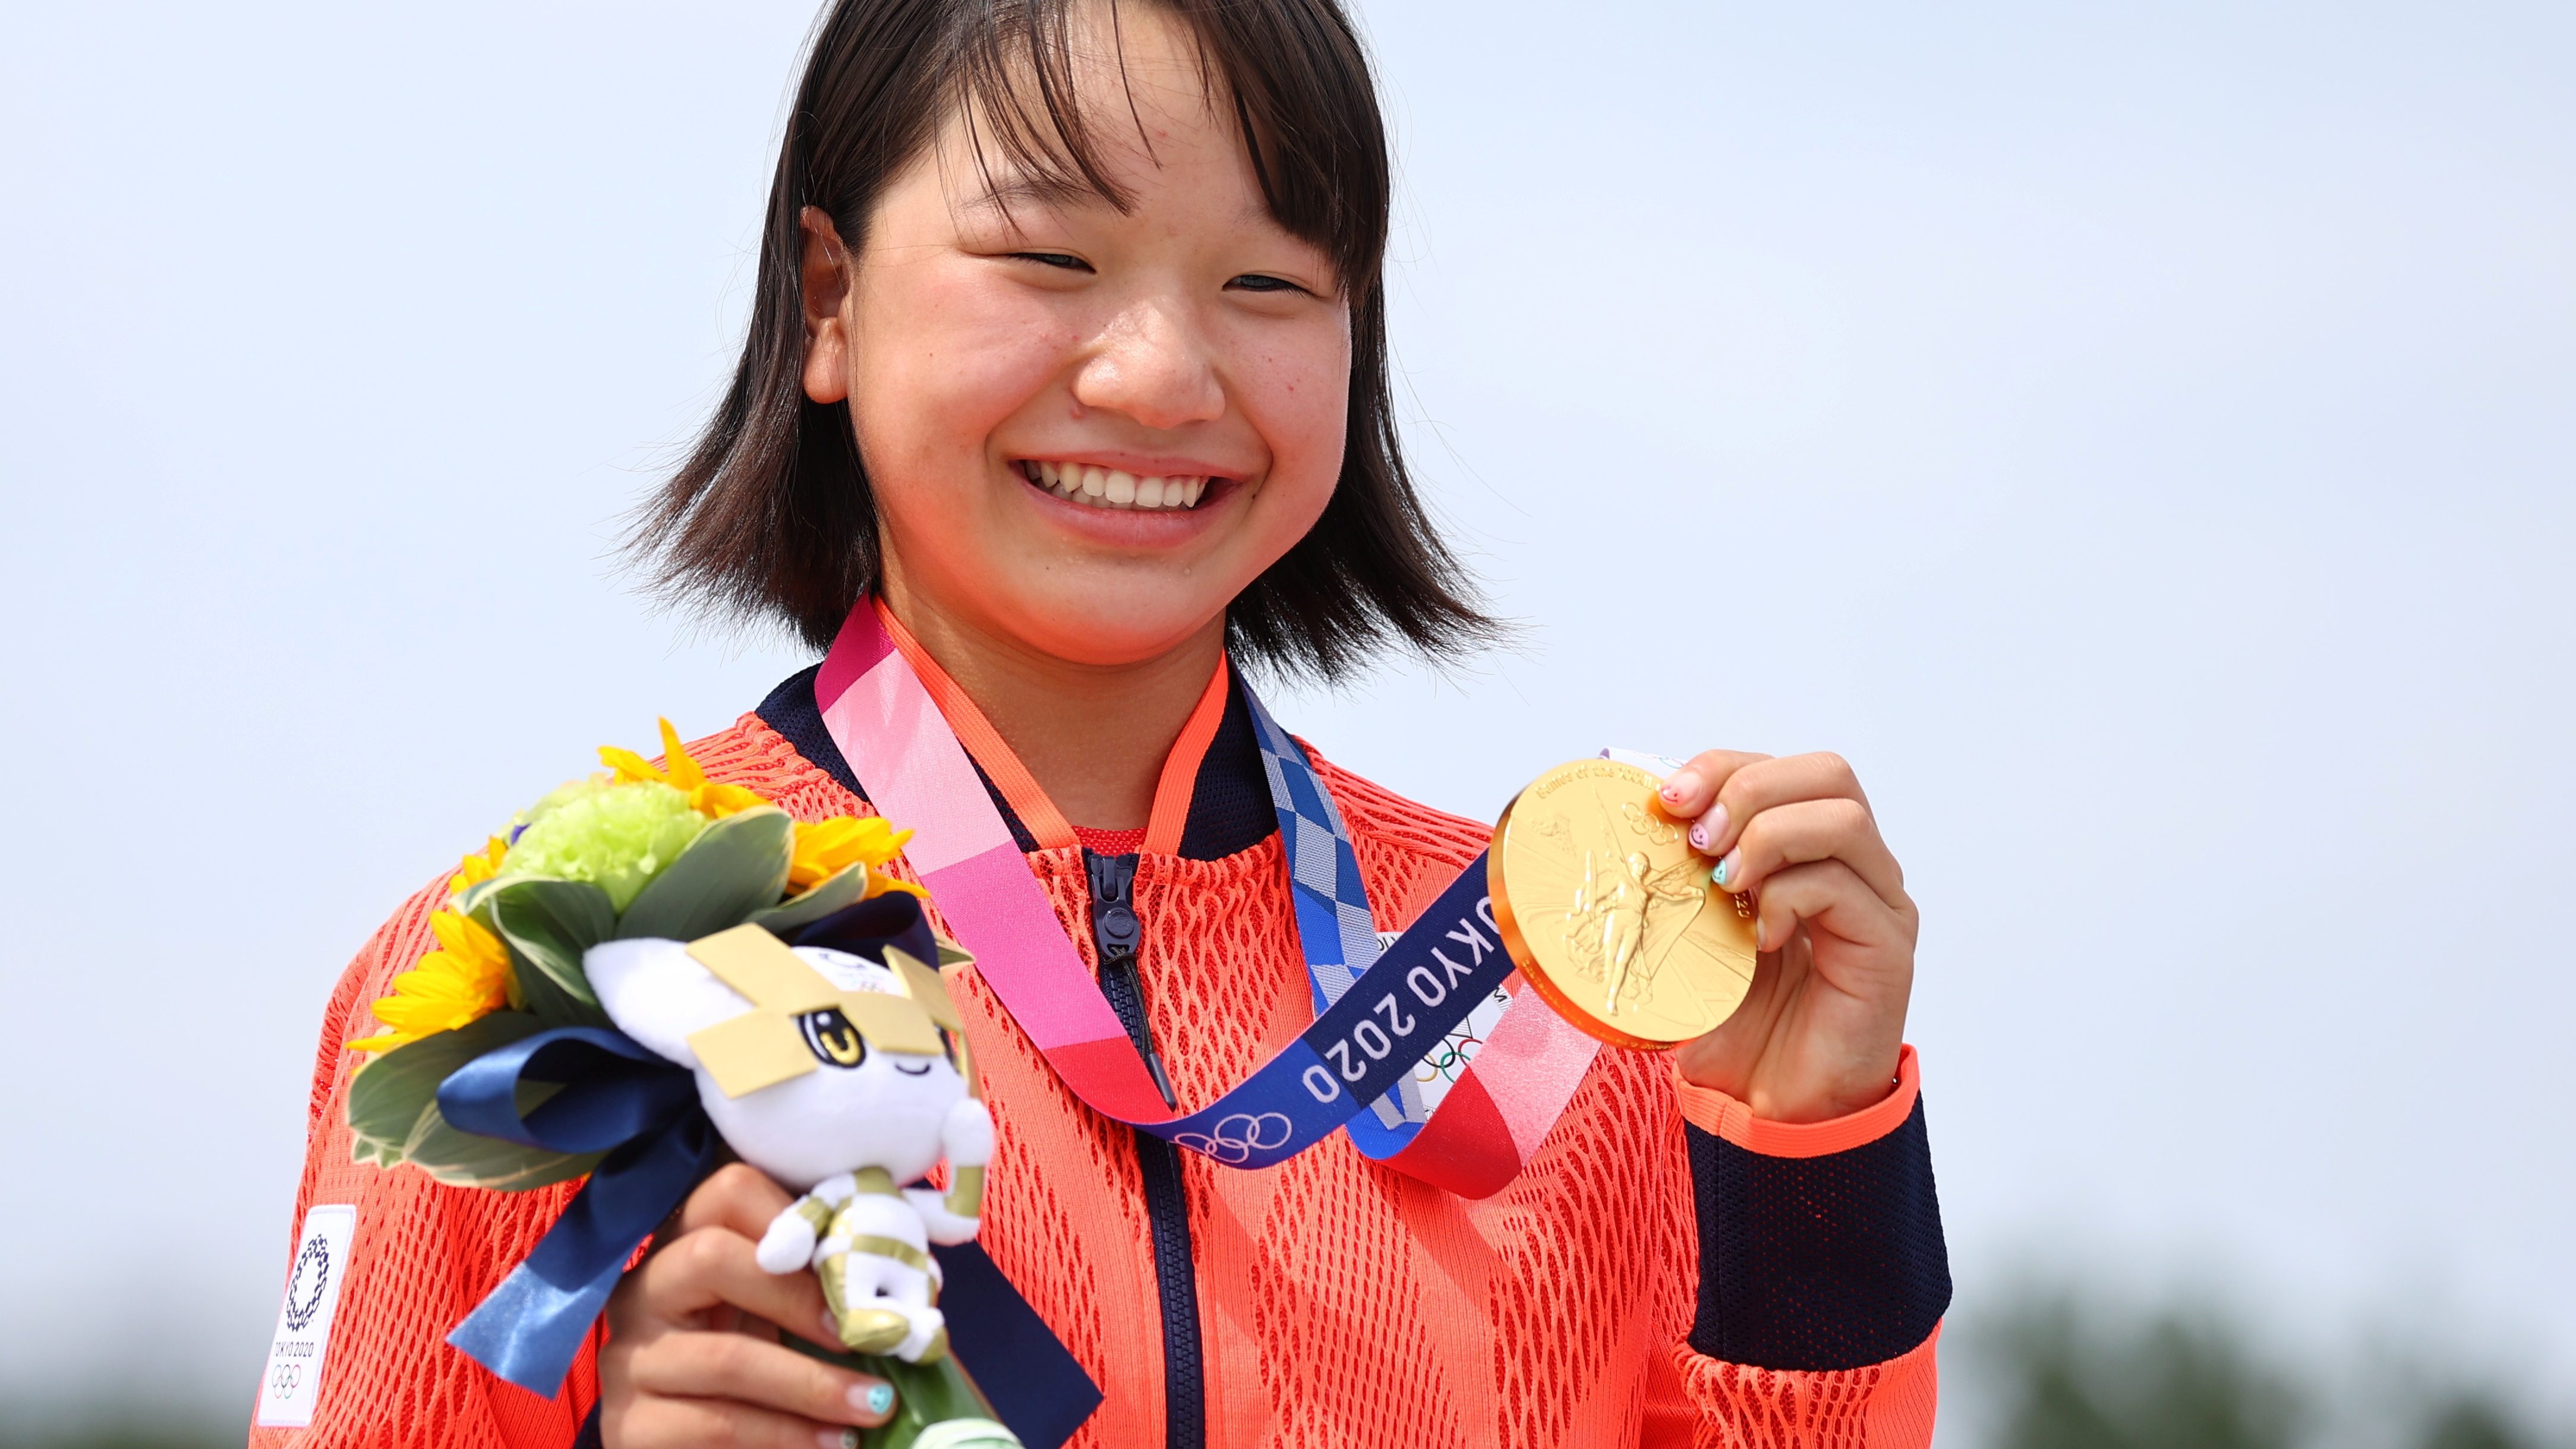 At 13, skater Momiji Nishiya becomes Japan’s youngest gold medalist